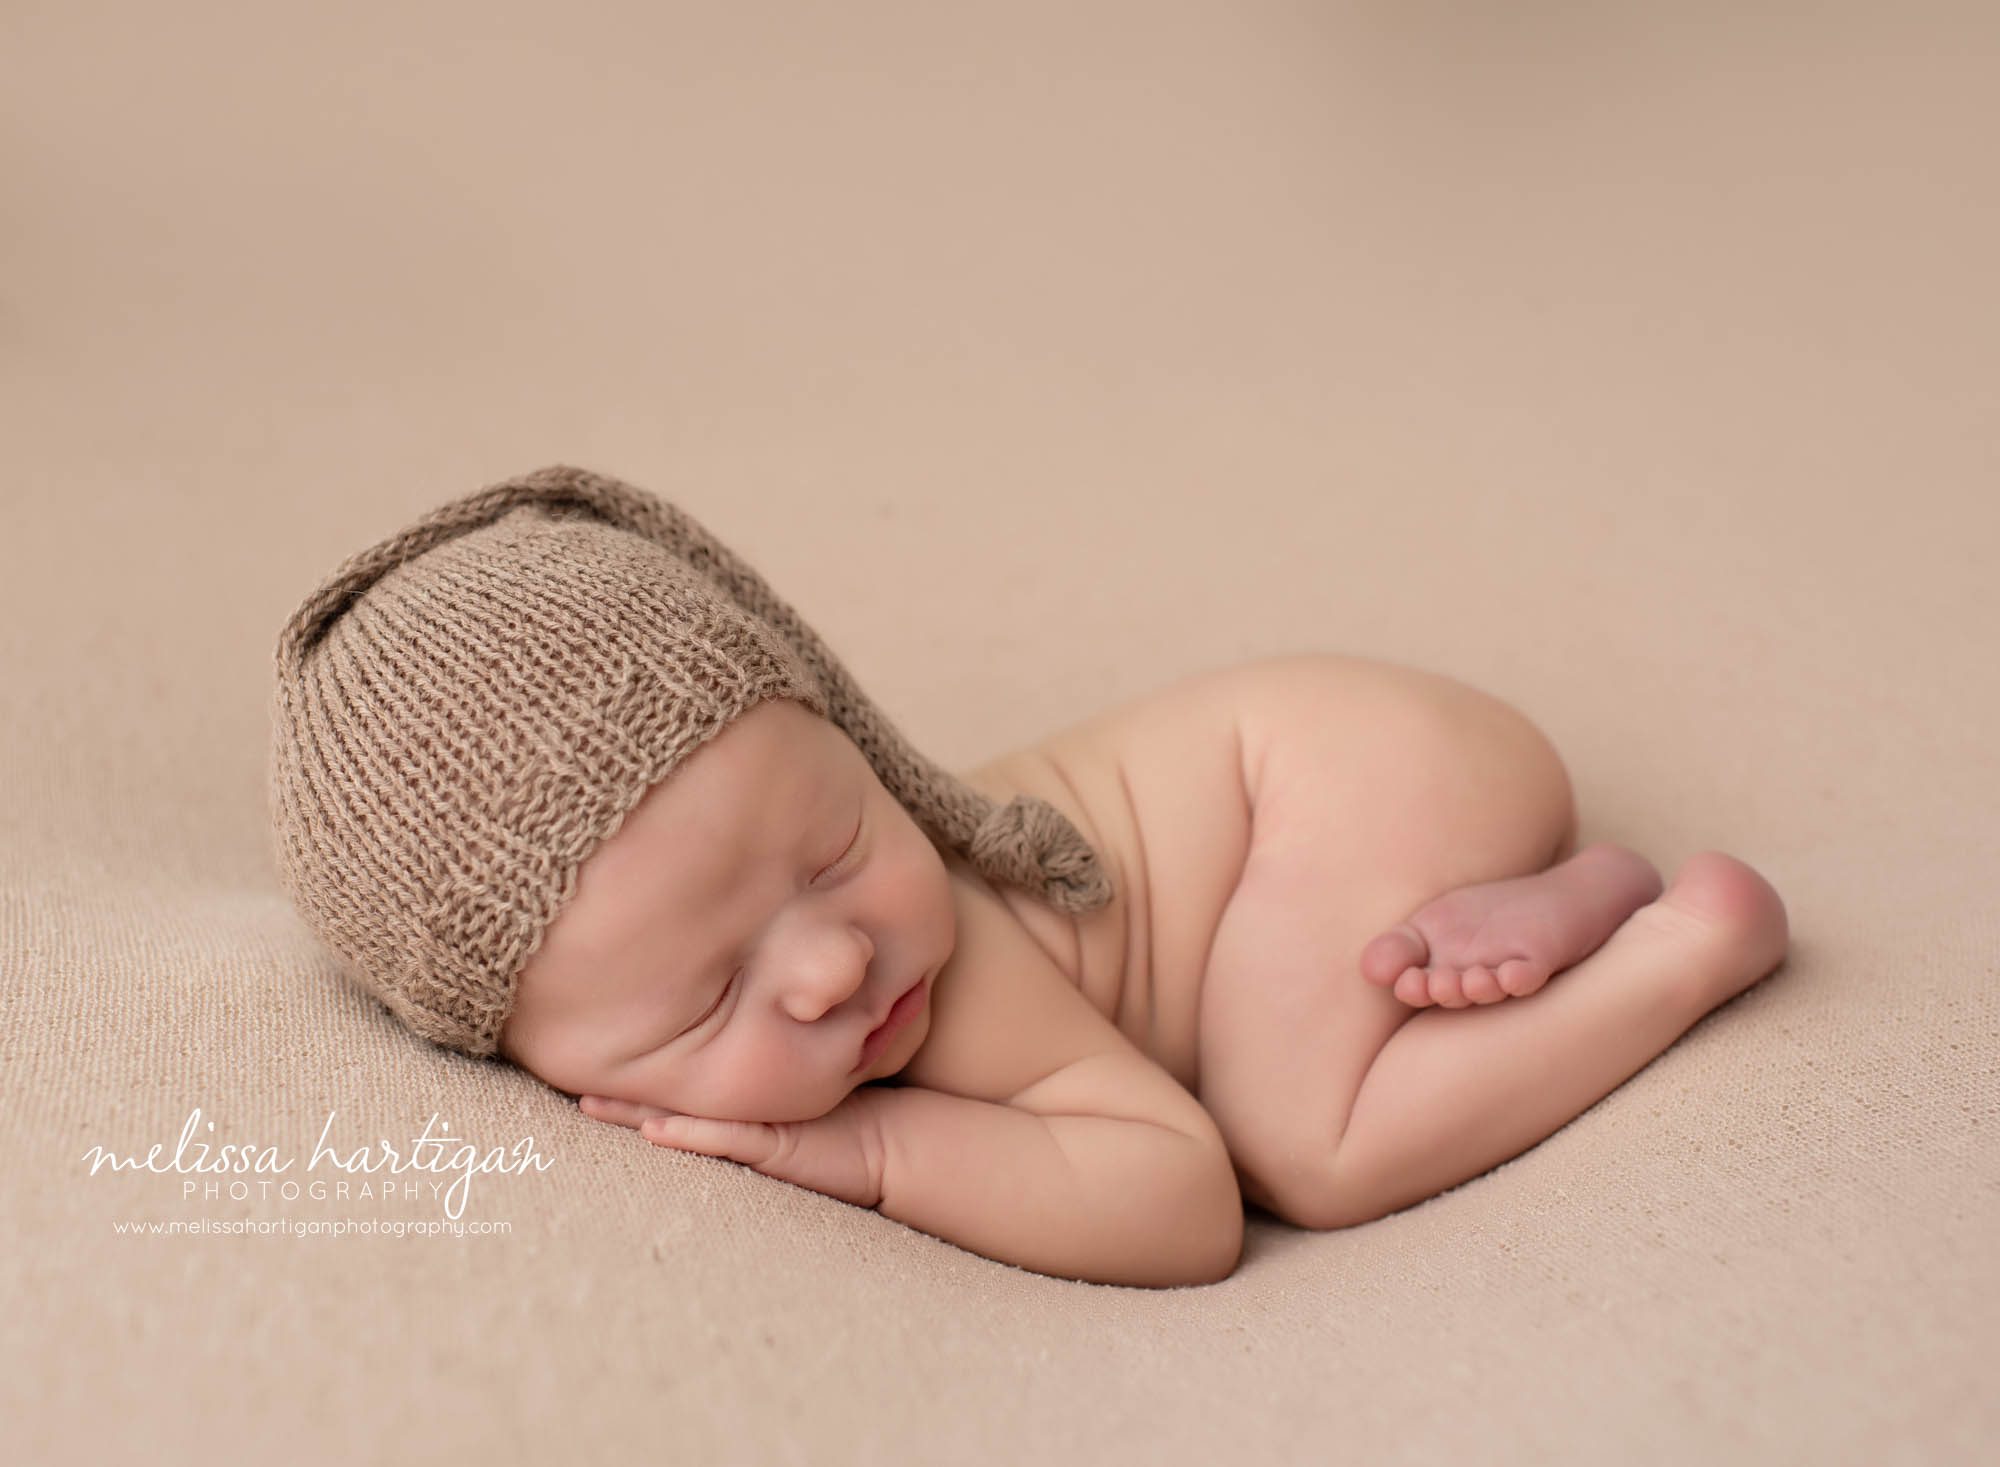 Newborn baby boy posed on tummy tan colored knitted sleepy cap CT newborn Photographer